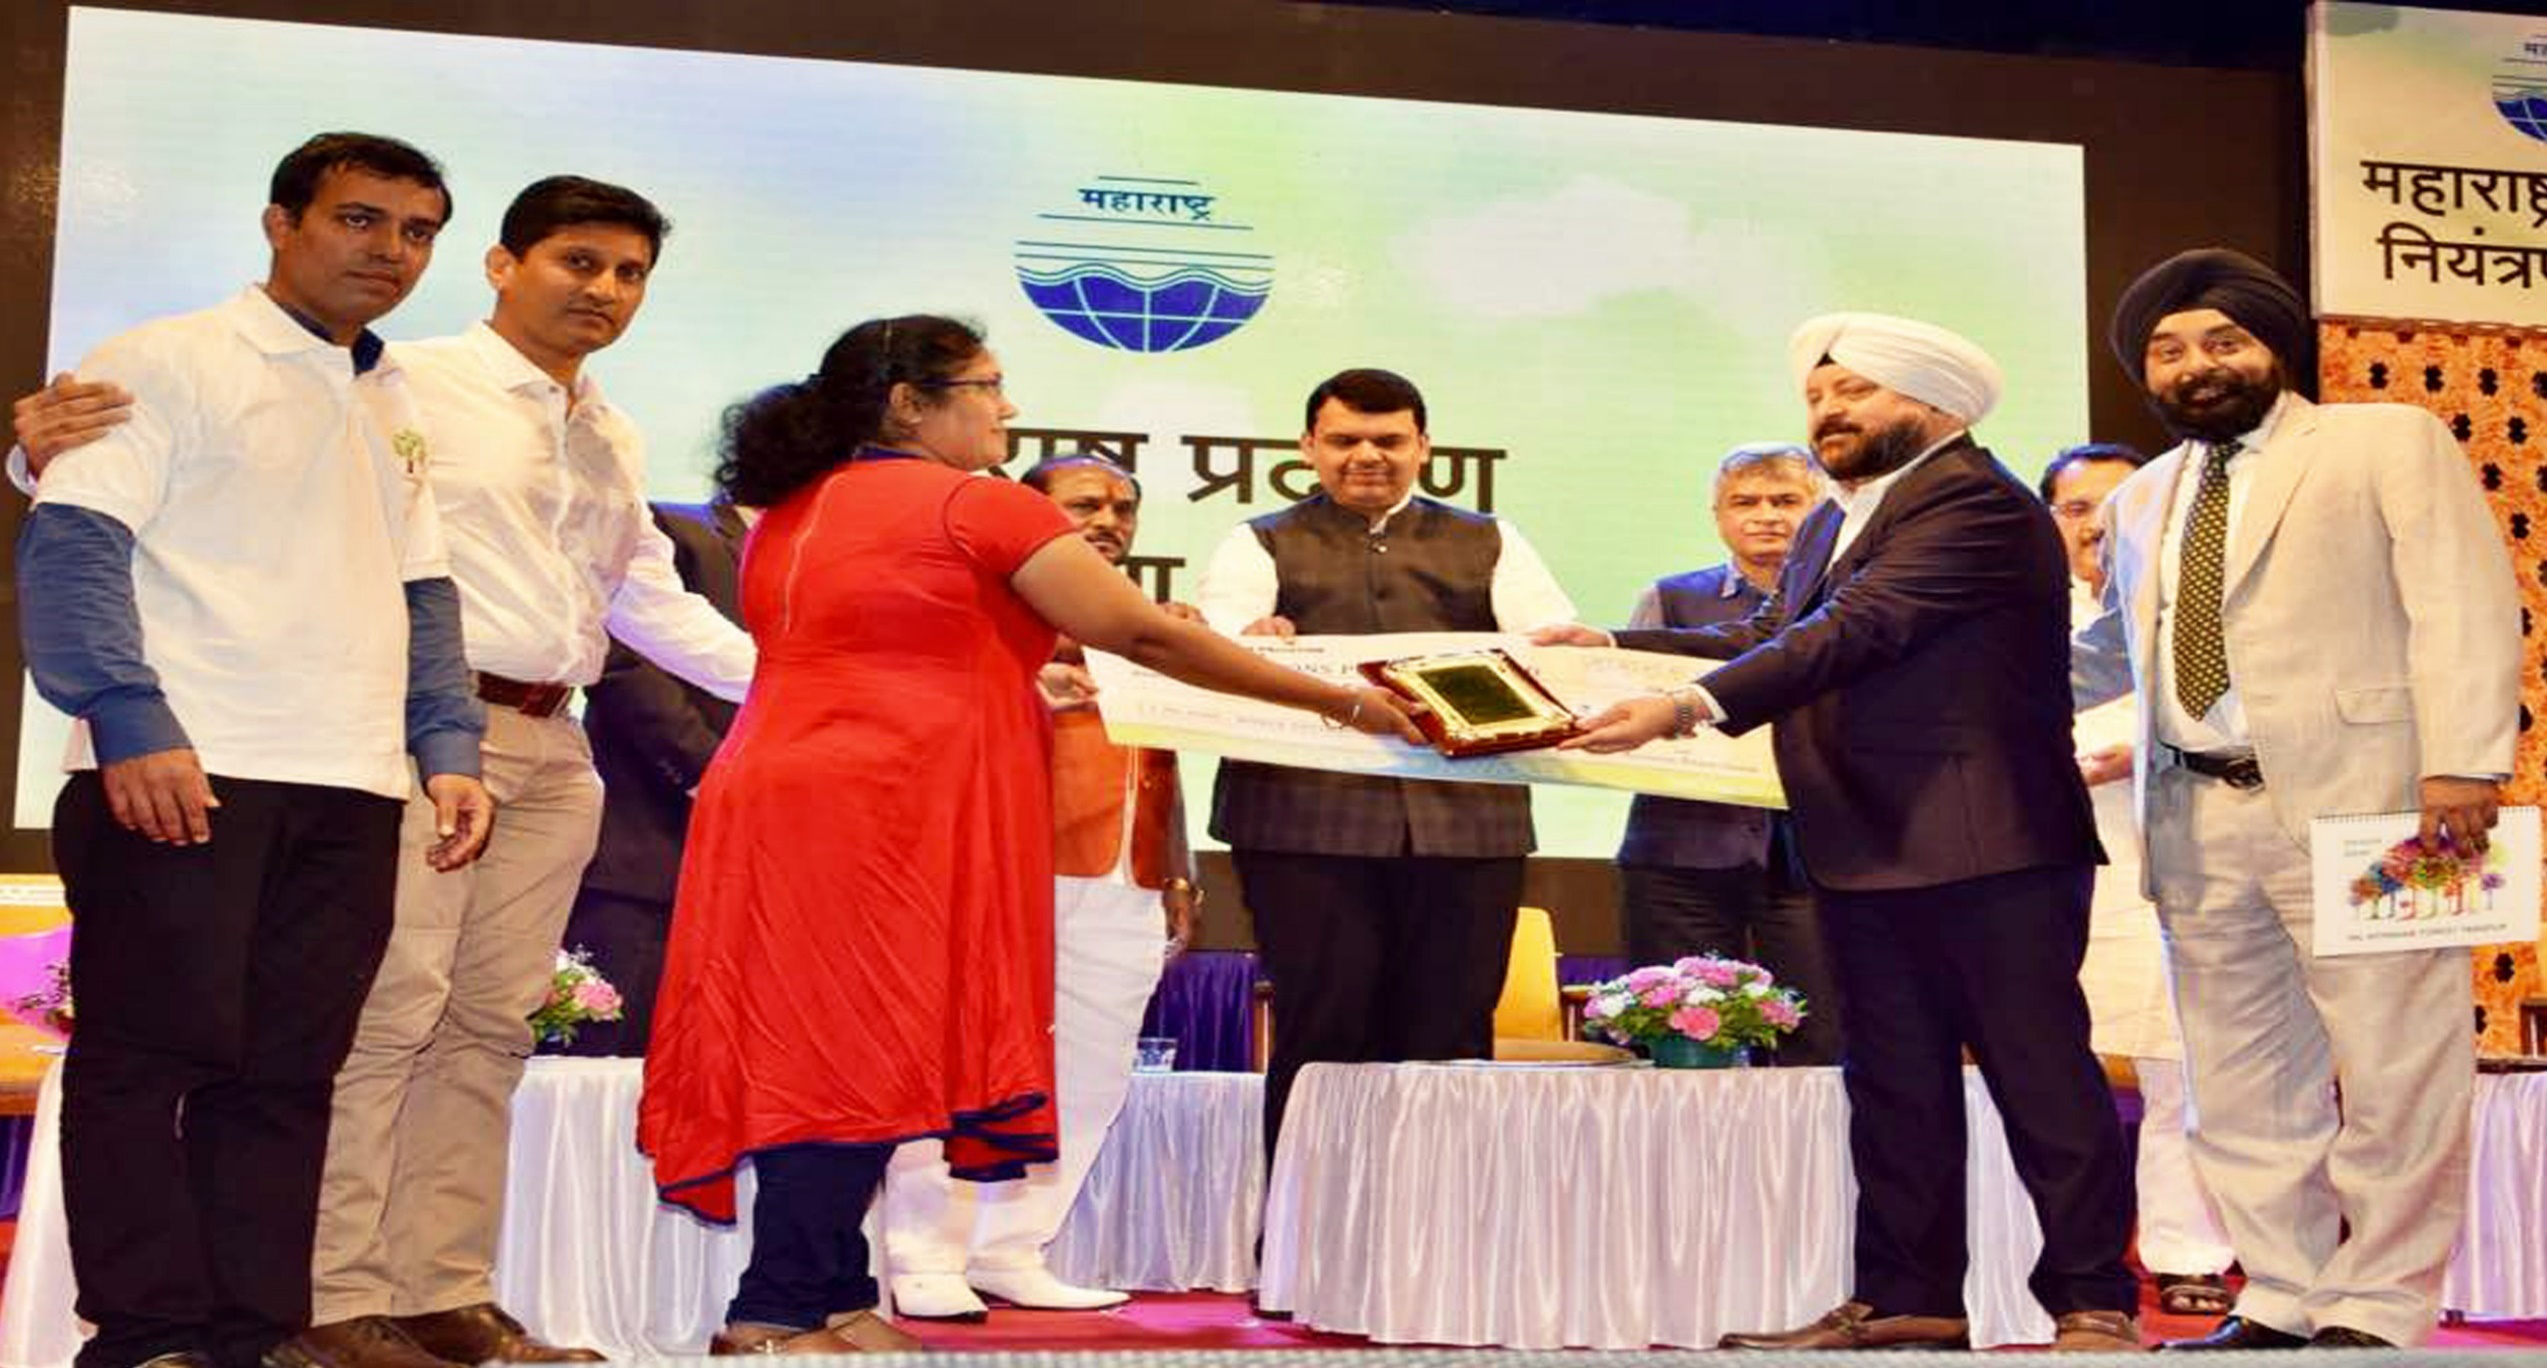 On 5thJune 2017, World Environment Day our Hon’ble Chief Minister Shri DevendraFadnavisJi presented the VasundraSpecial Appreciation Award for Tree Plantation to Pal Fashions Private Limited.